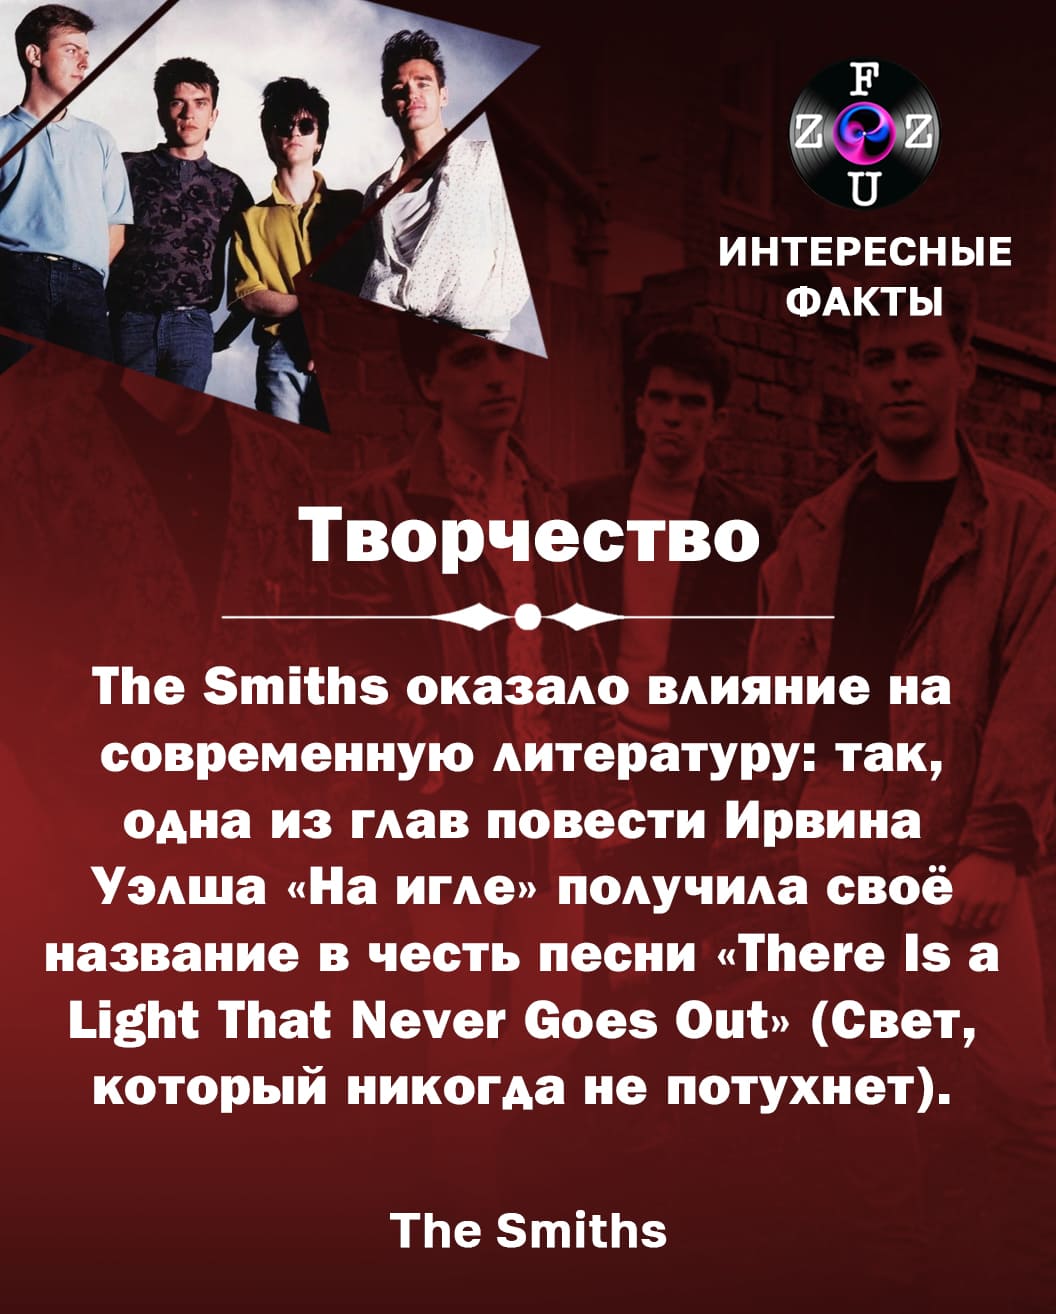 The Smiths: интересные факты о группе